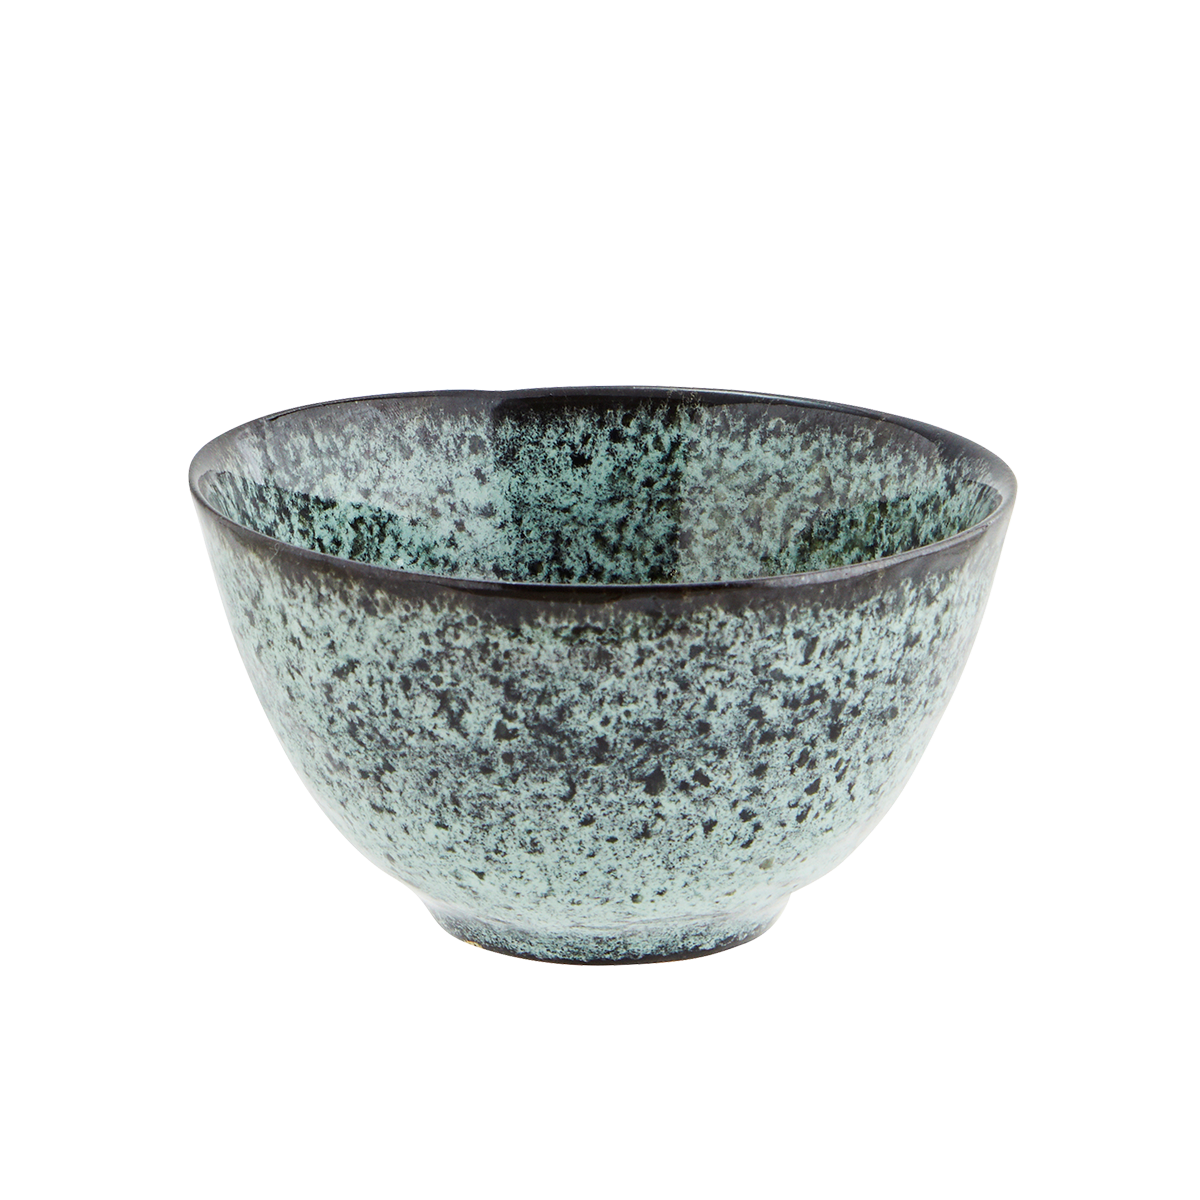 Small stoneware bowl